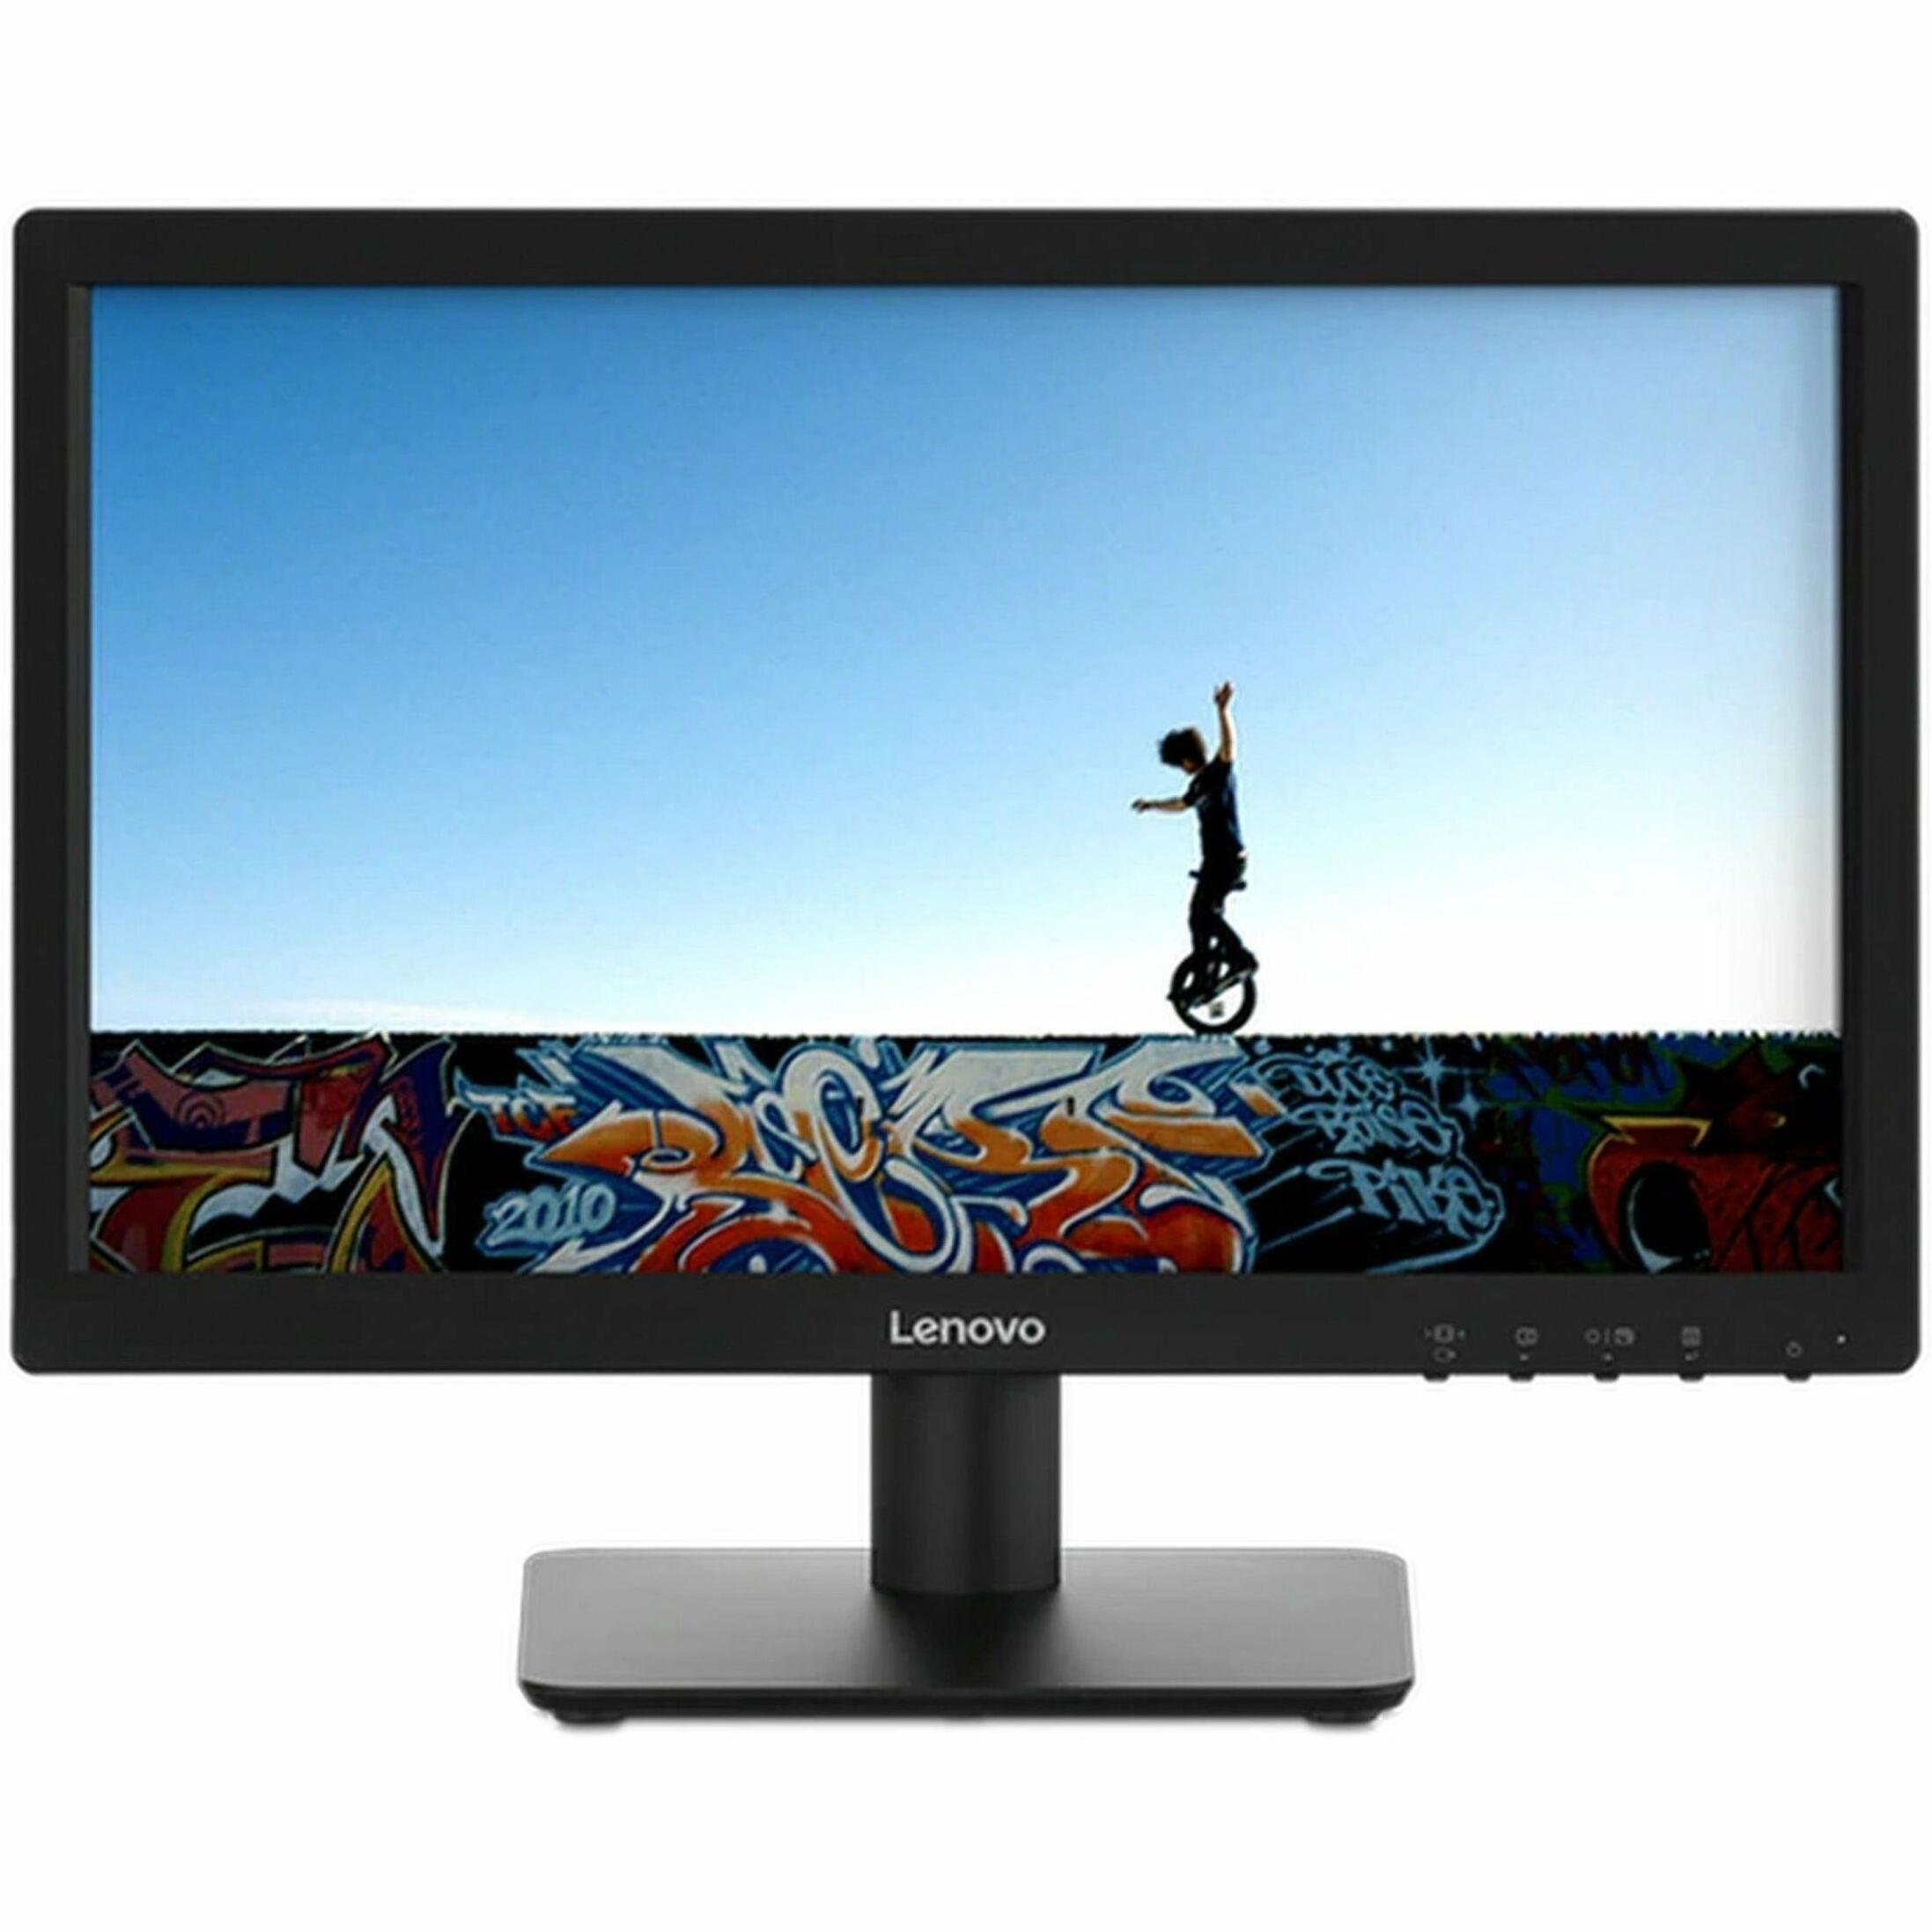 Lenovo 61E0KAR6US D19-10 Widescreen LCD Monitor, 18.5 WXGA, 16:9, 200 Nit, Black